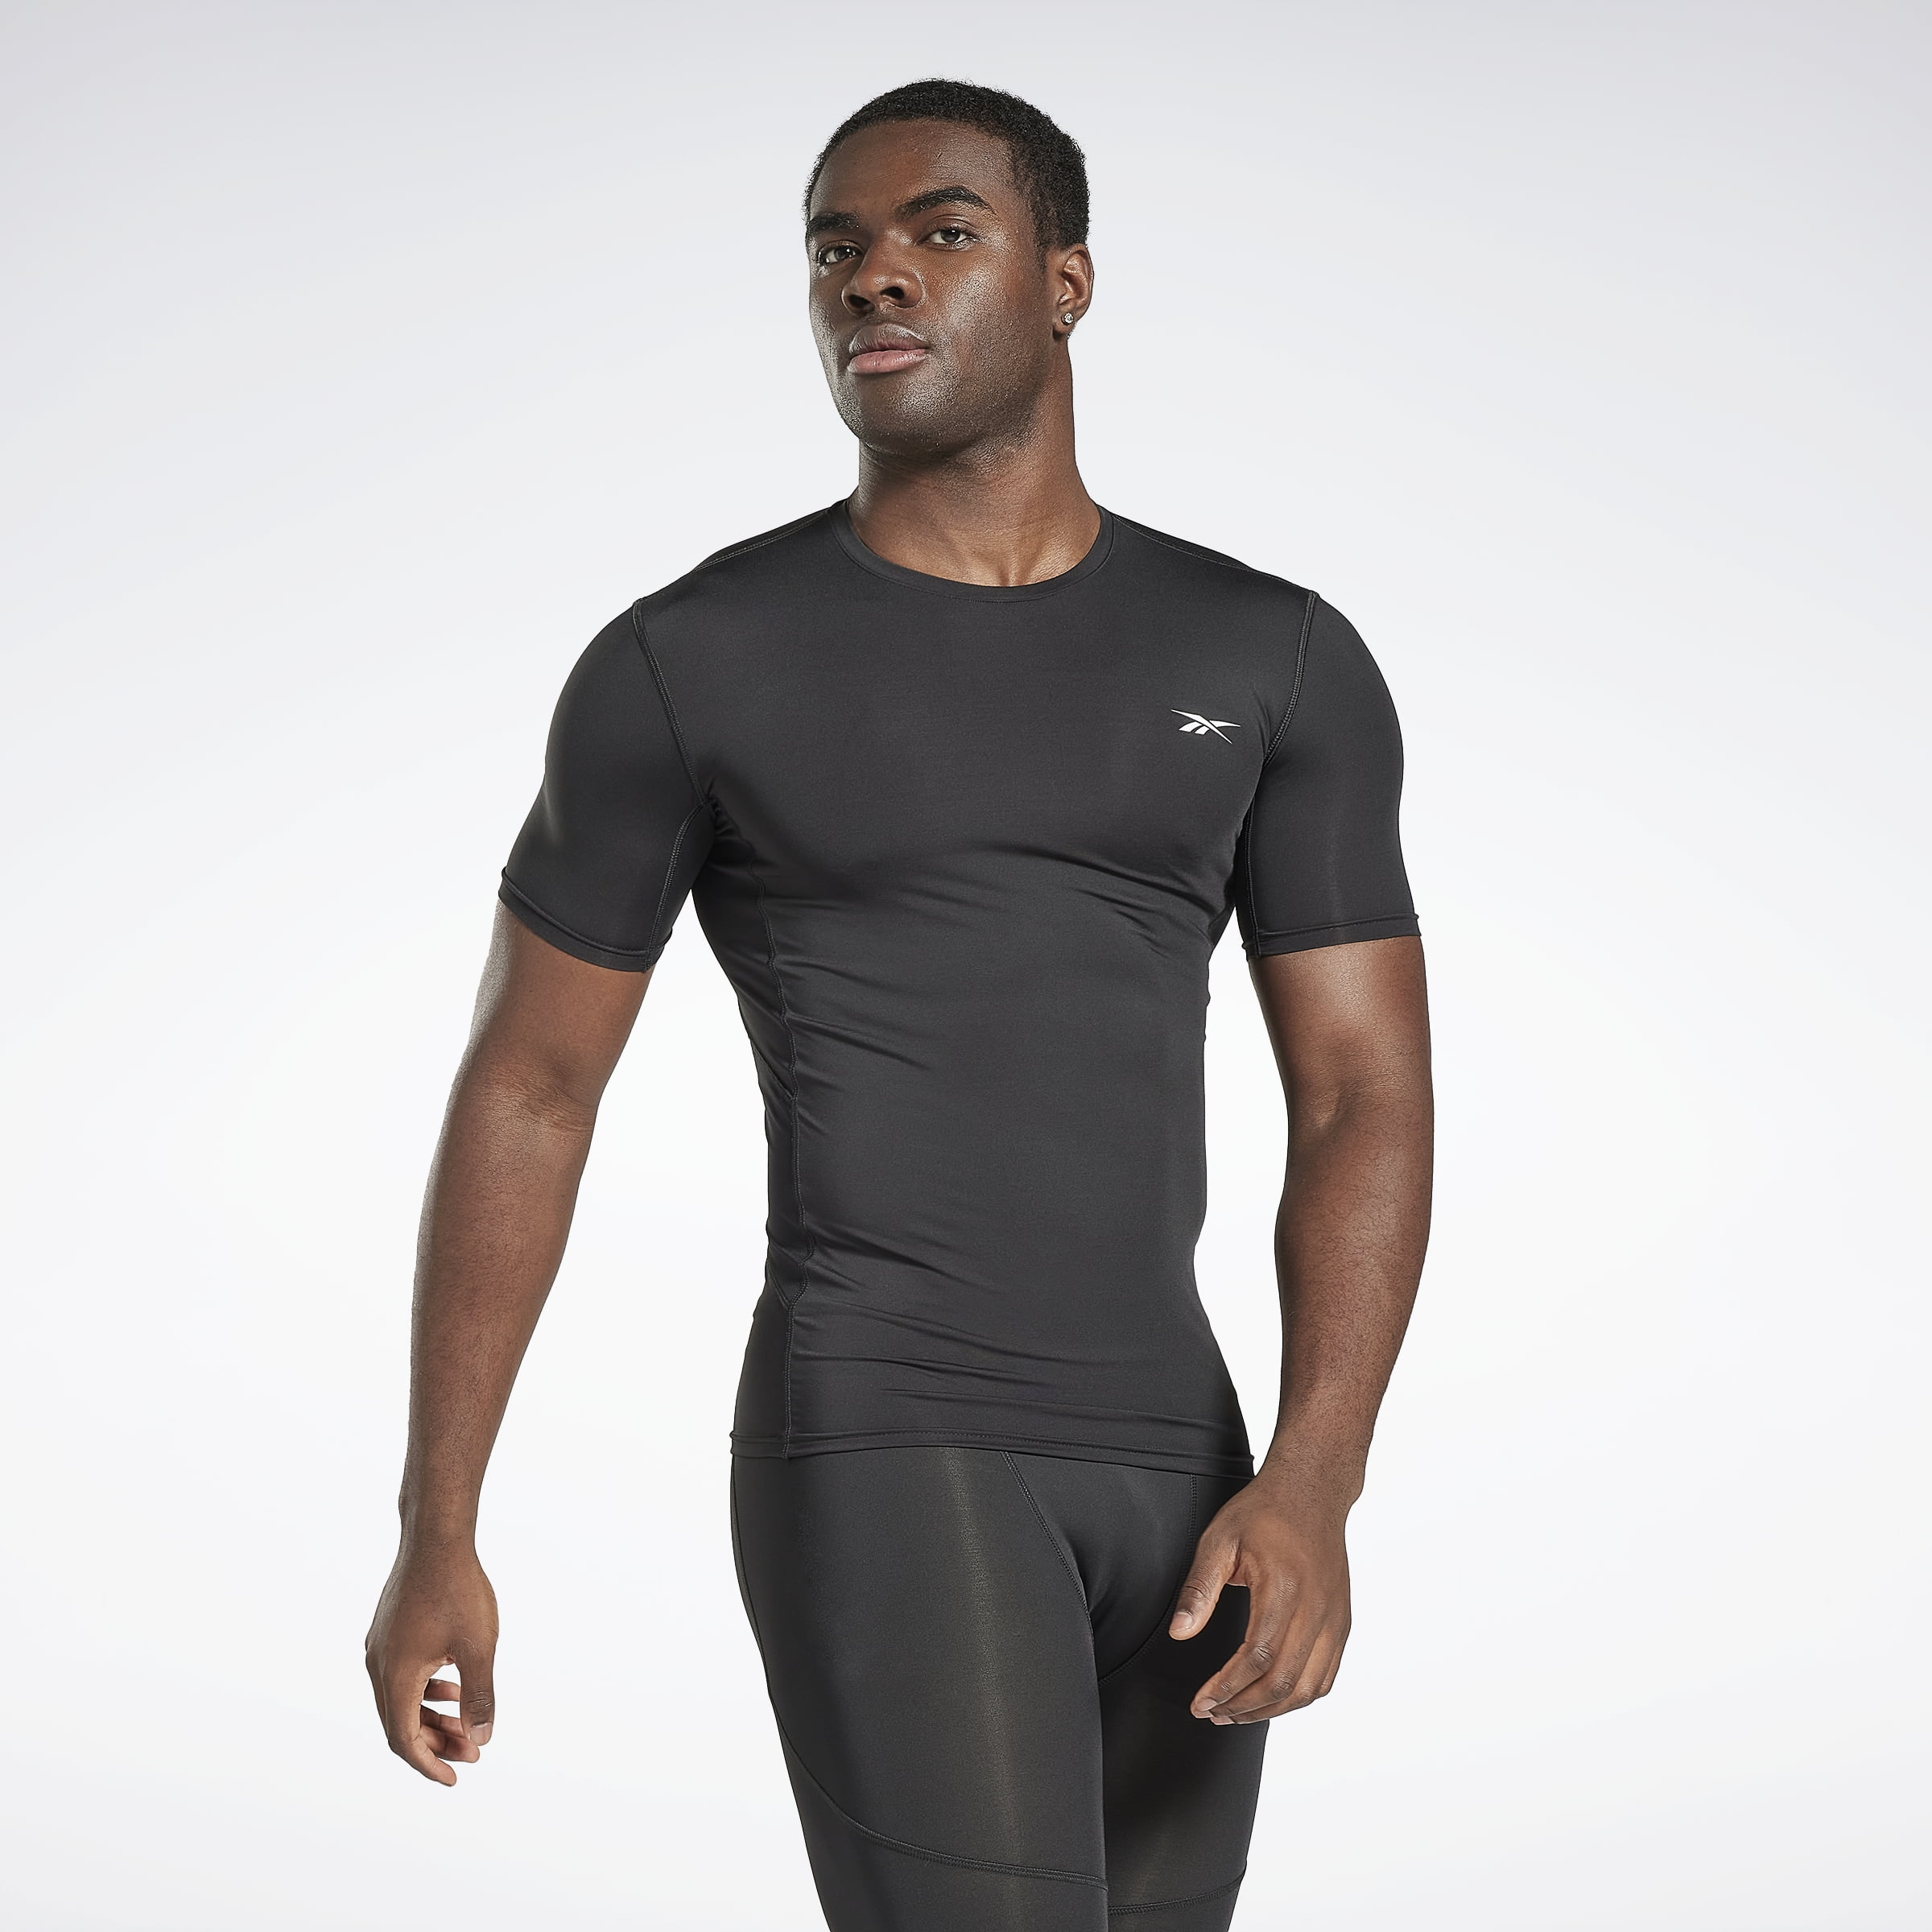 Disciplin ovn anspore Reebok Men's Workout Ready Compression T-Shirt - Walmart.com